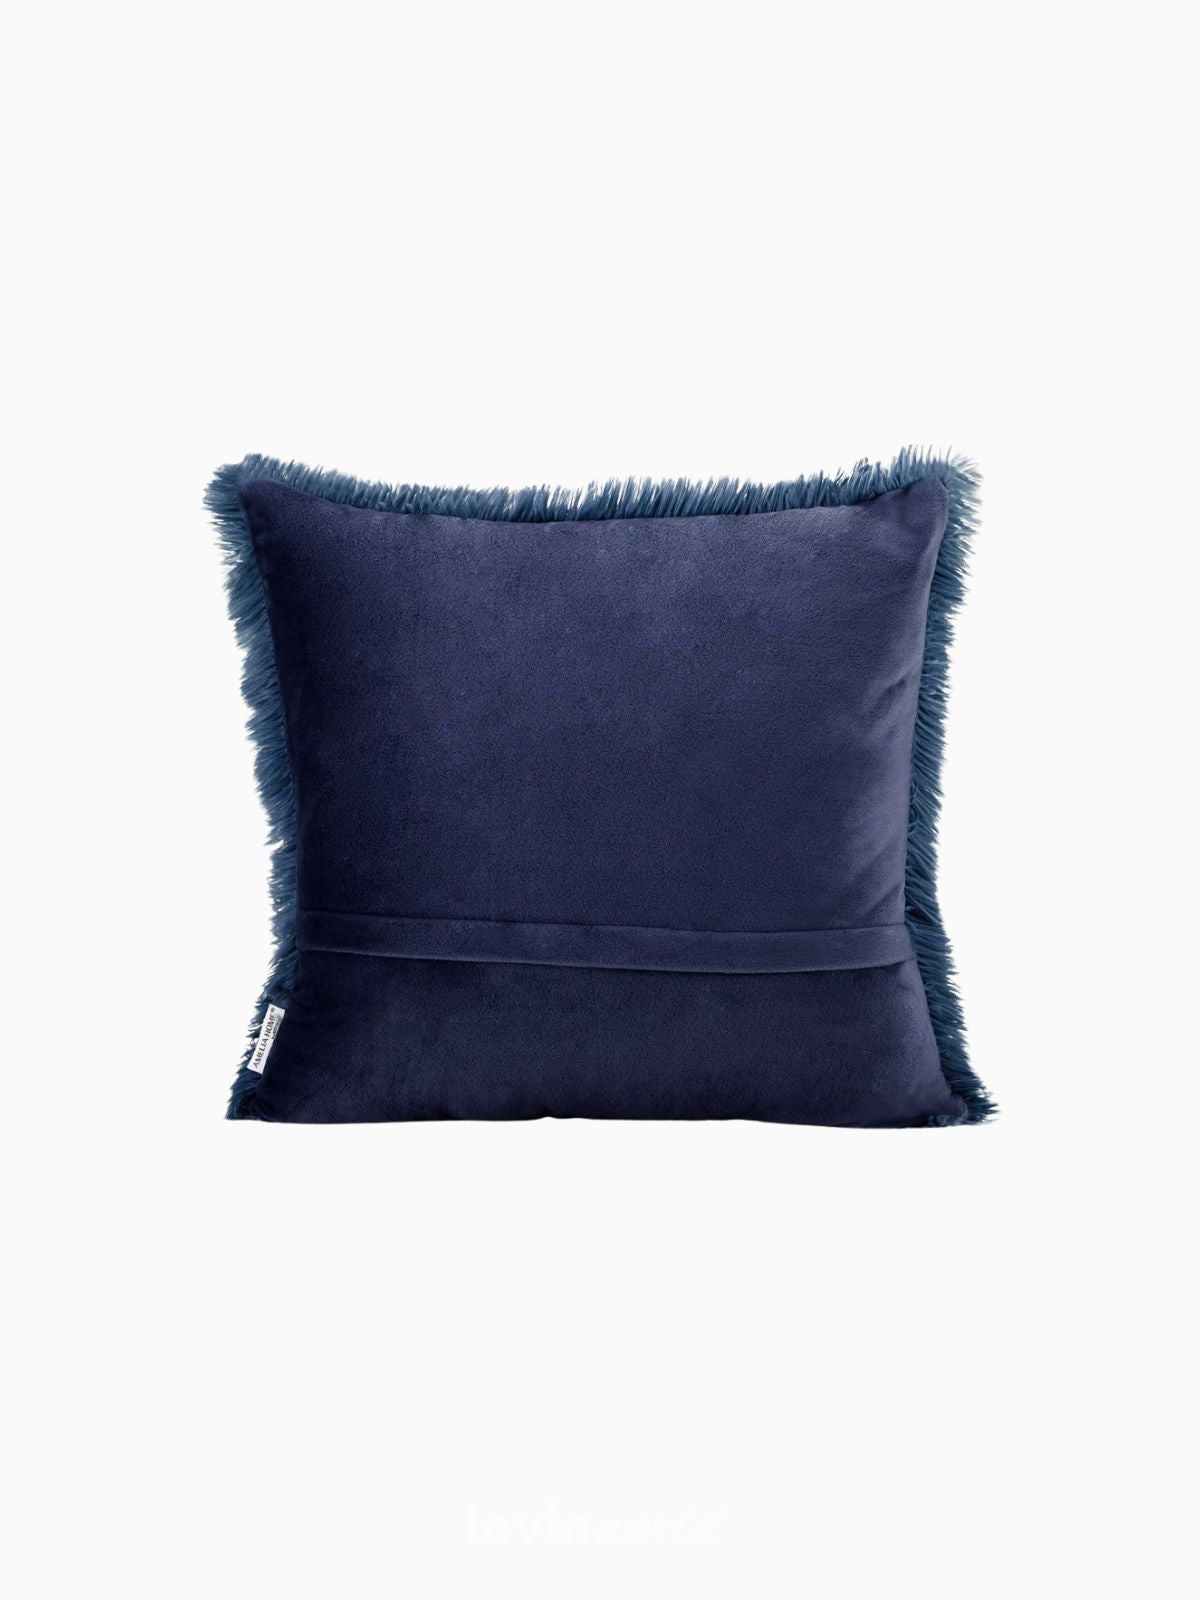 2 Federe per cuscino Karvag in colore blu scuro 45x45 cm.-4